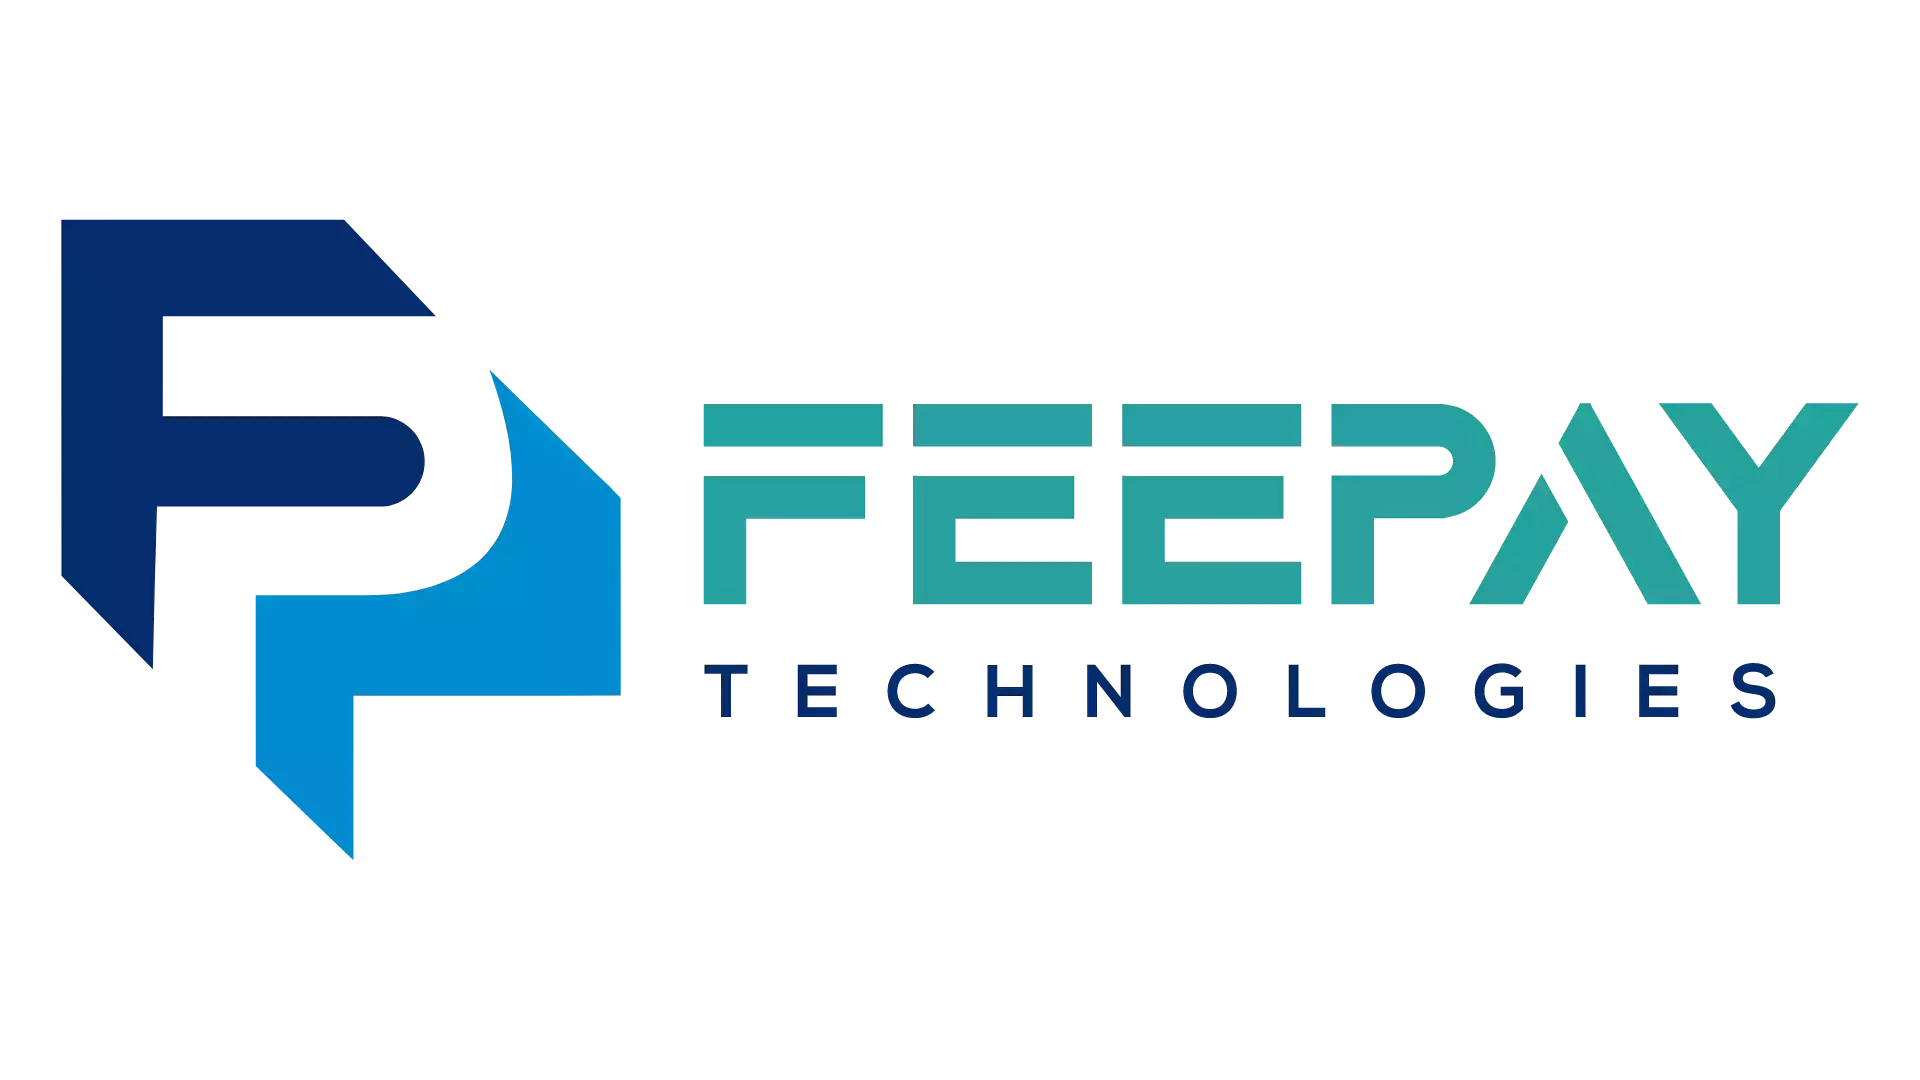 Feepay Technologies